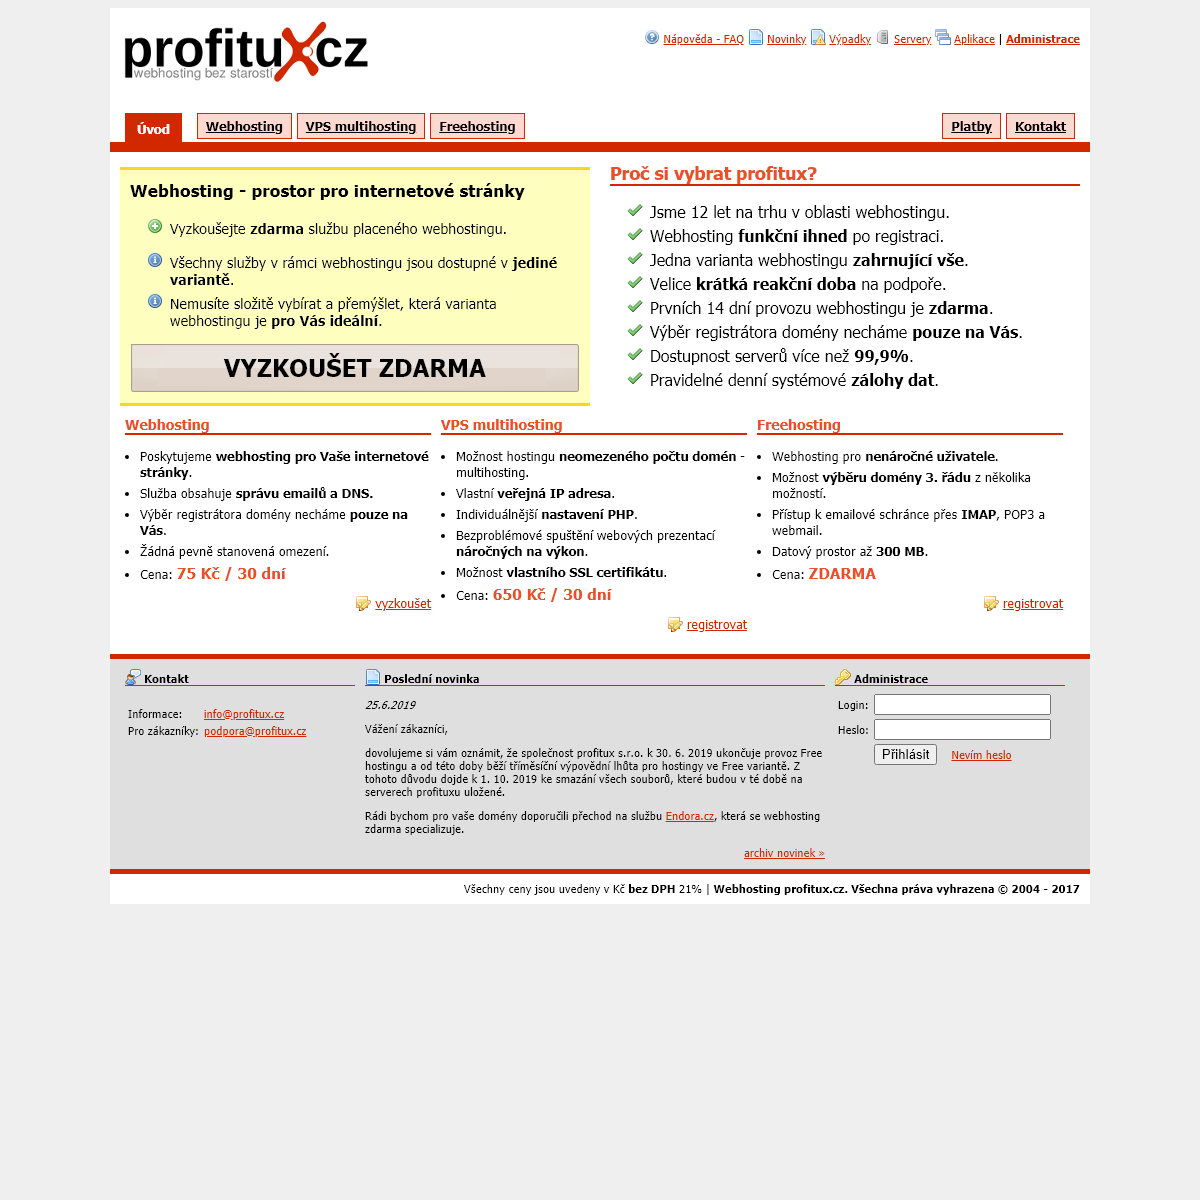 A complete backup of profitux.cz